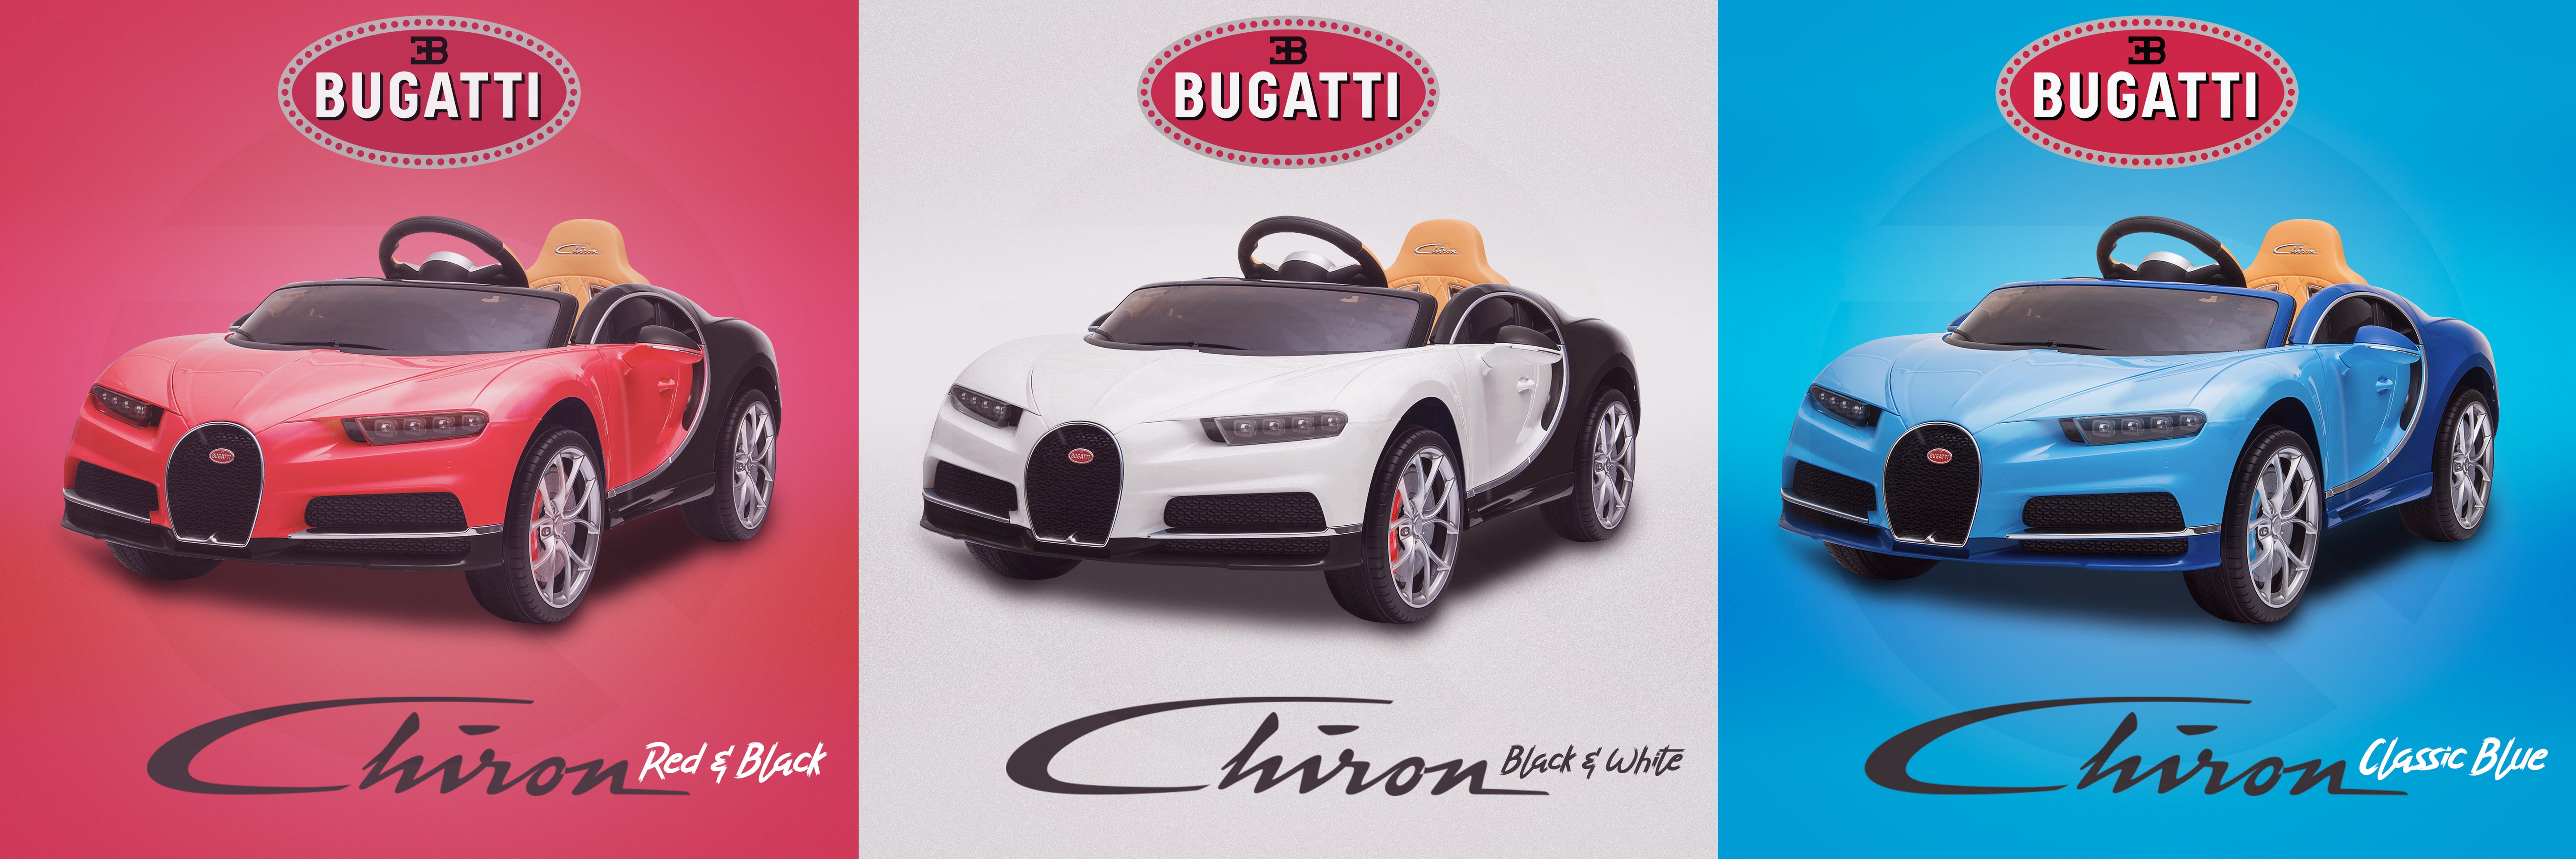 kids bugatti chiron licensed electric ride on car black set two 12v